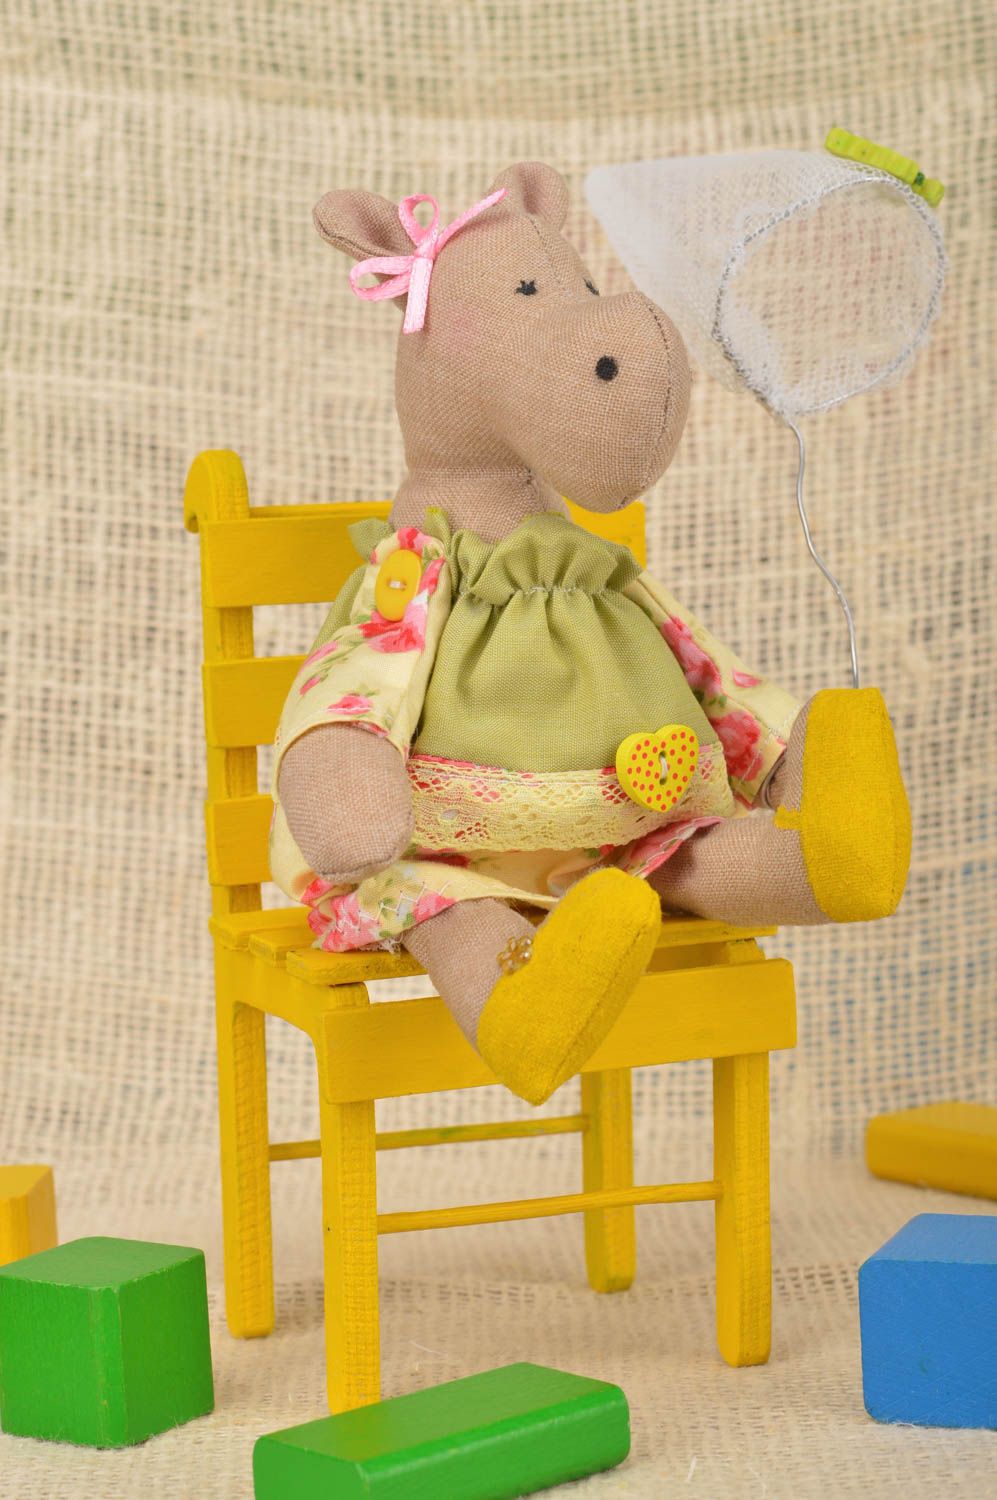 Beautiful handmade cotton fabric toy stuffed soft toy for kids nursery designs photo 1